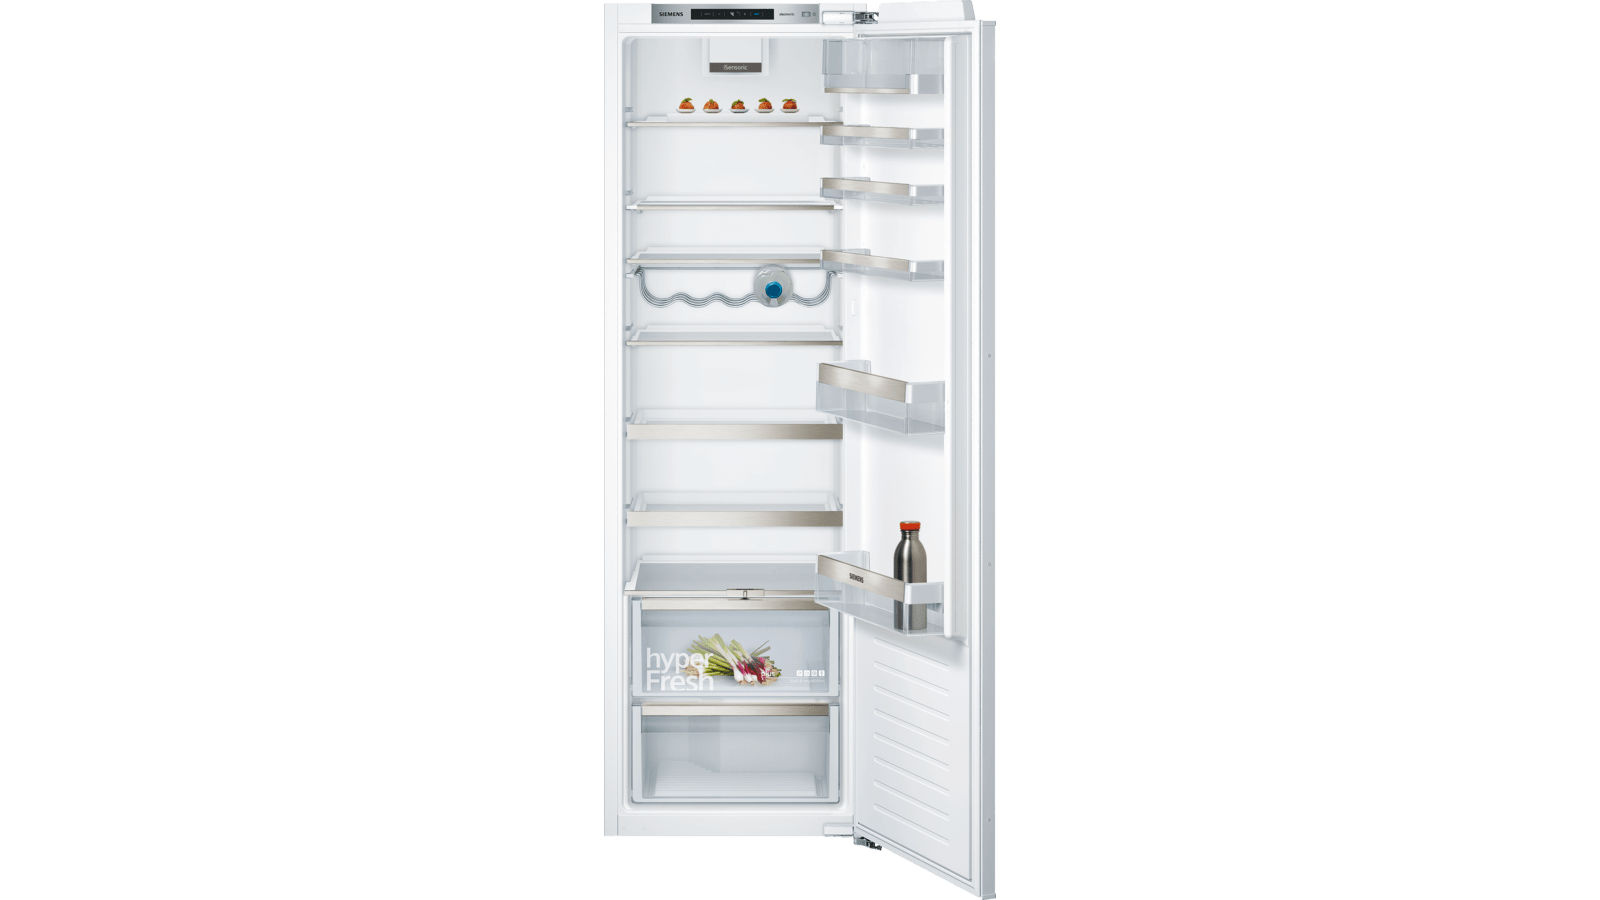 Siemens KI81RAF30 frigorifero Bianco incorporatto capacità lorda 321 litri